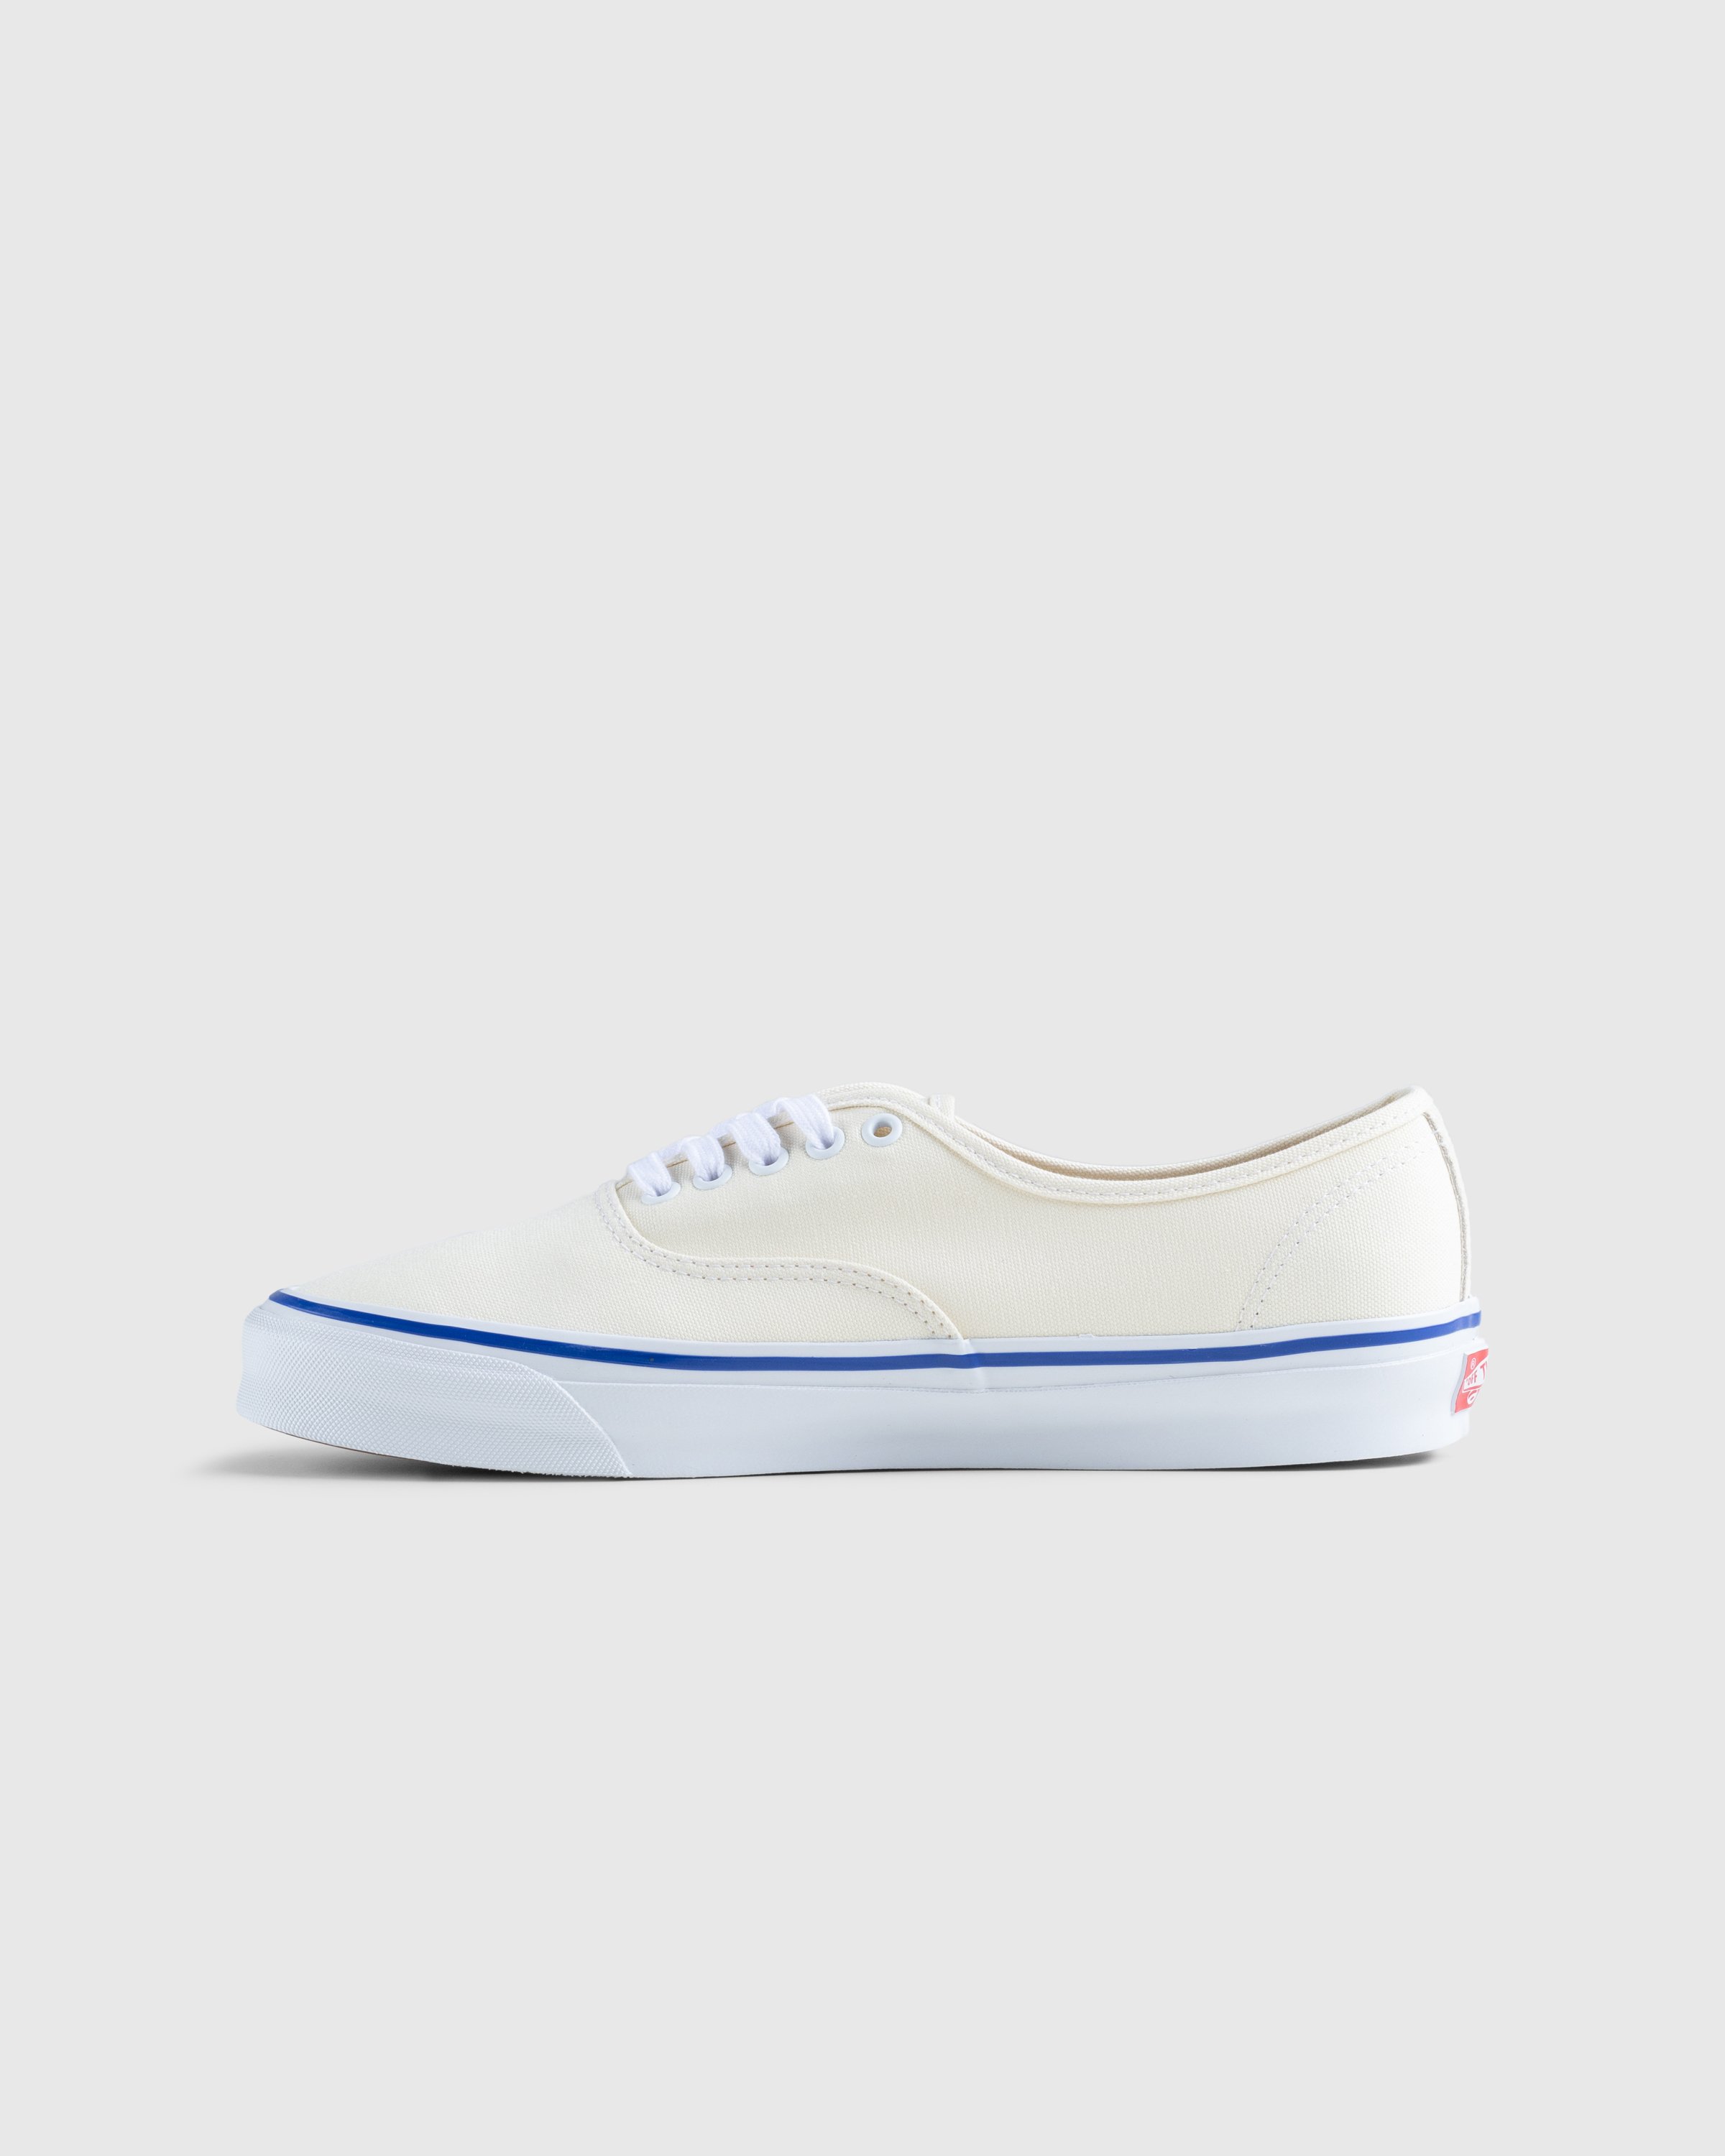 Vans - UA OG Authentic LX Classic White - Footwear - White - Image 2